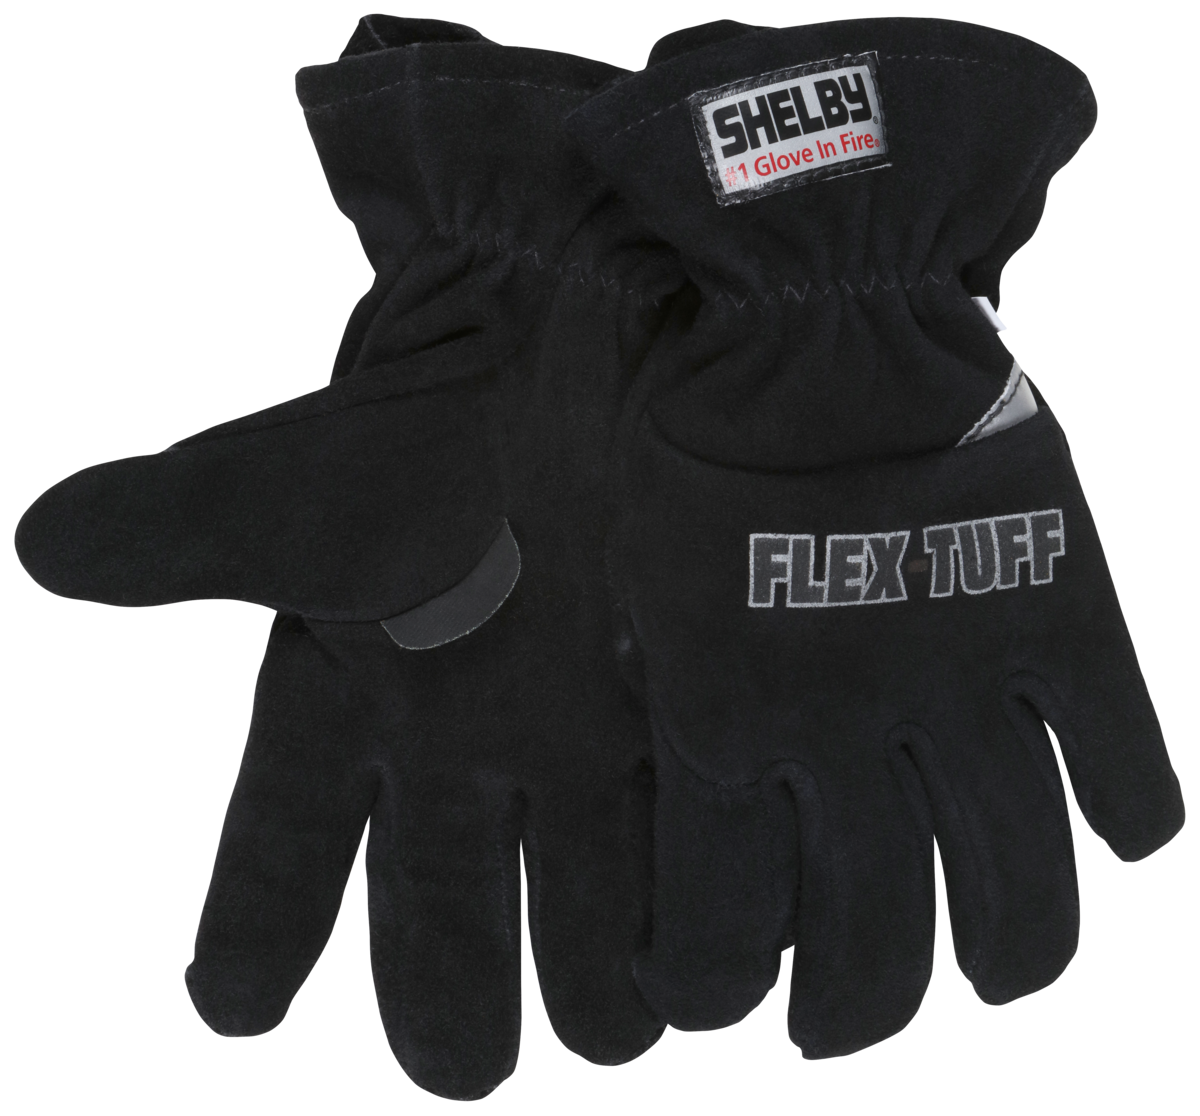 5292 - Shelby® Flex Tuff Fire Glove Gauntlet